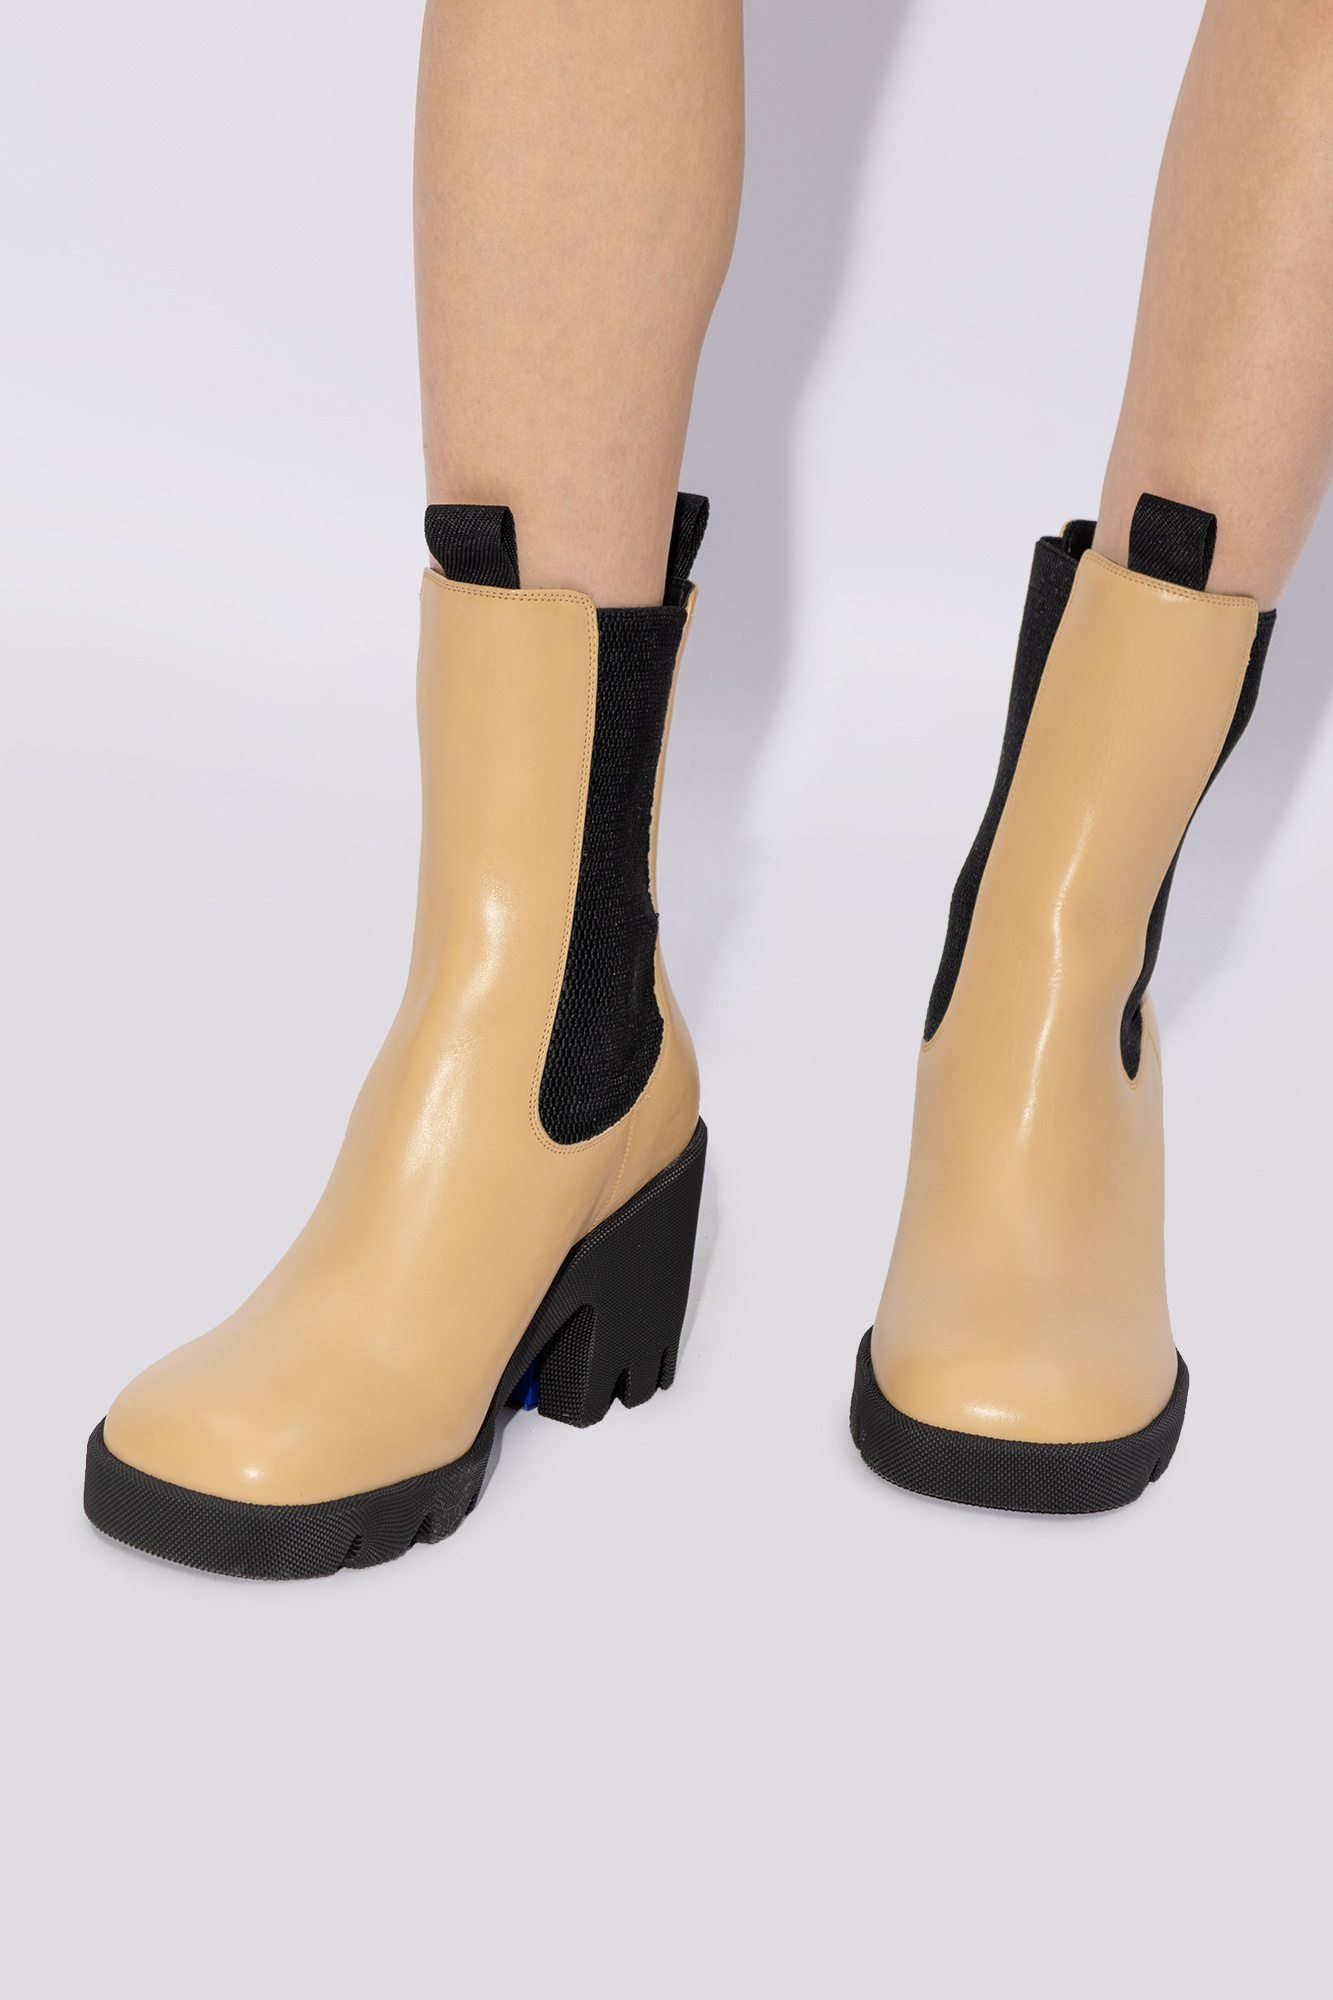 Burberry ‘Stride’ platform ankle boots